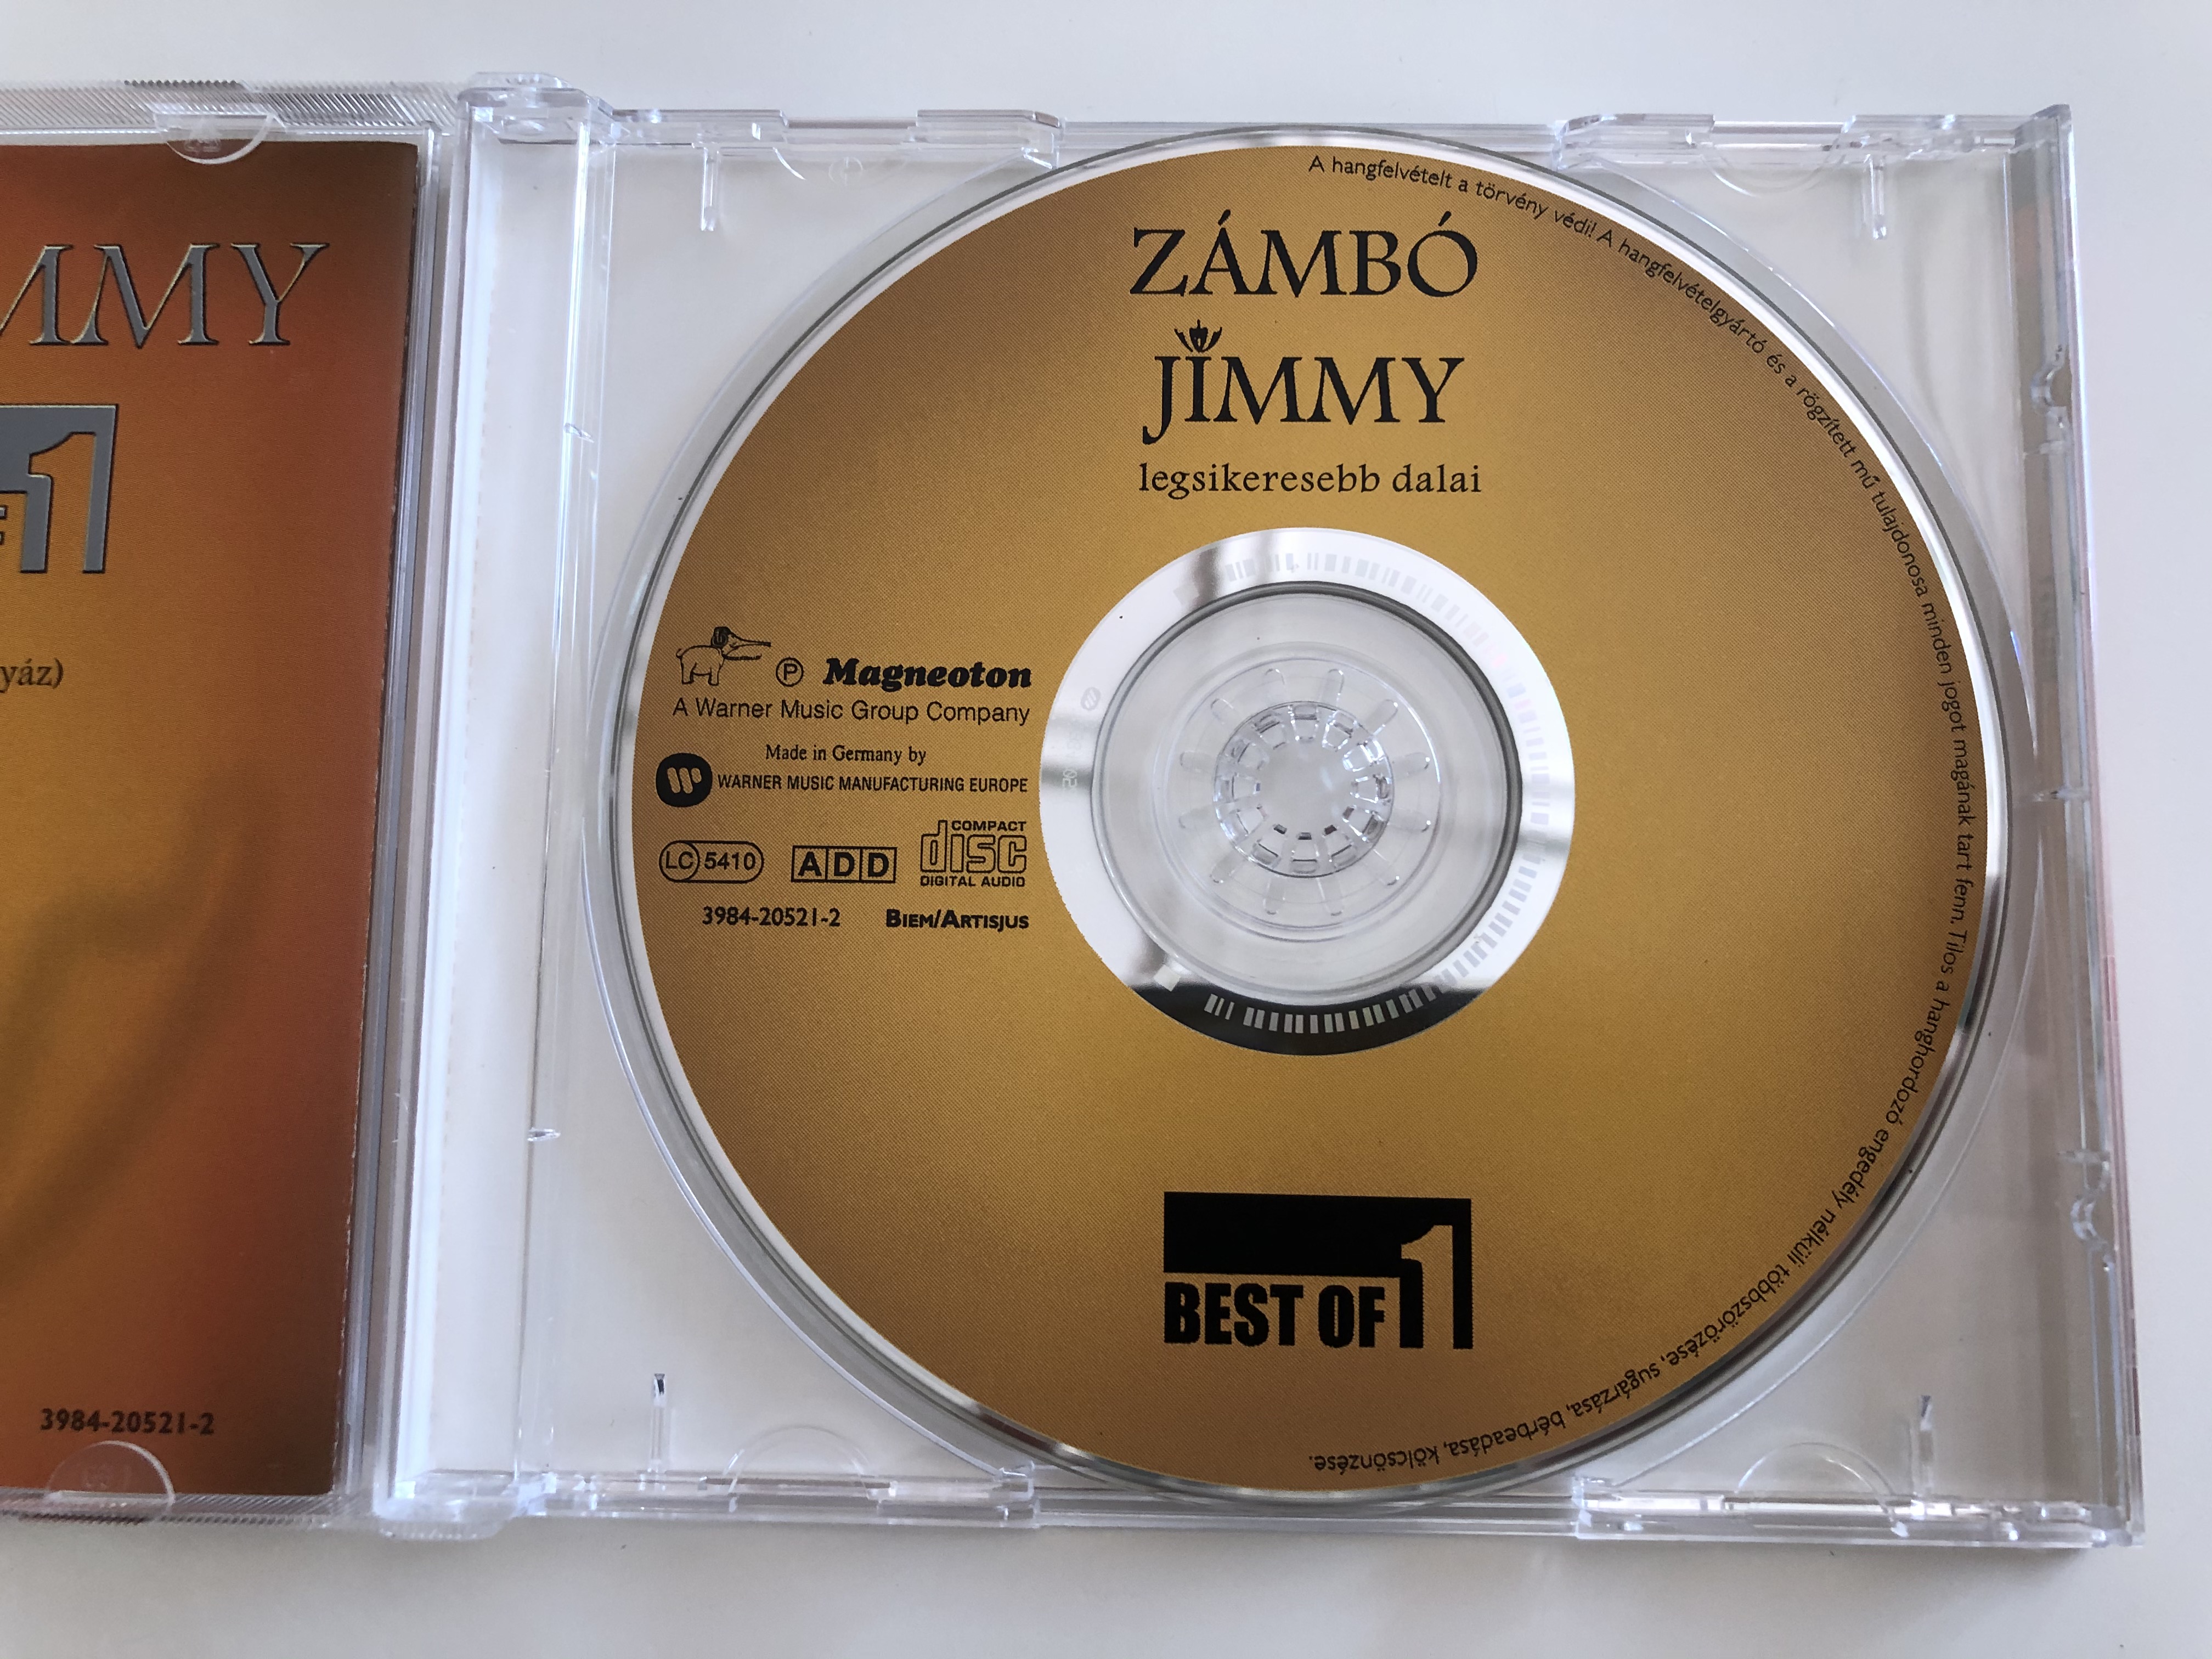 z-mb-jimmy-best-of-1-legsikeresebb-dalai-2-uj-dal-magneoton-audio-cd-1997-3984-20521-2-6-.jpg